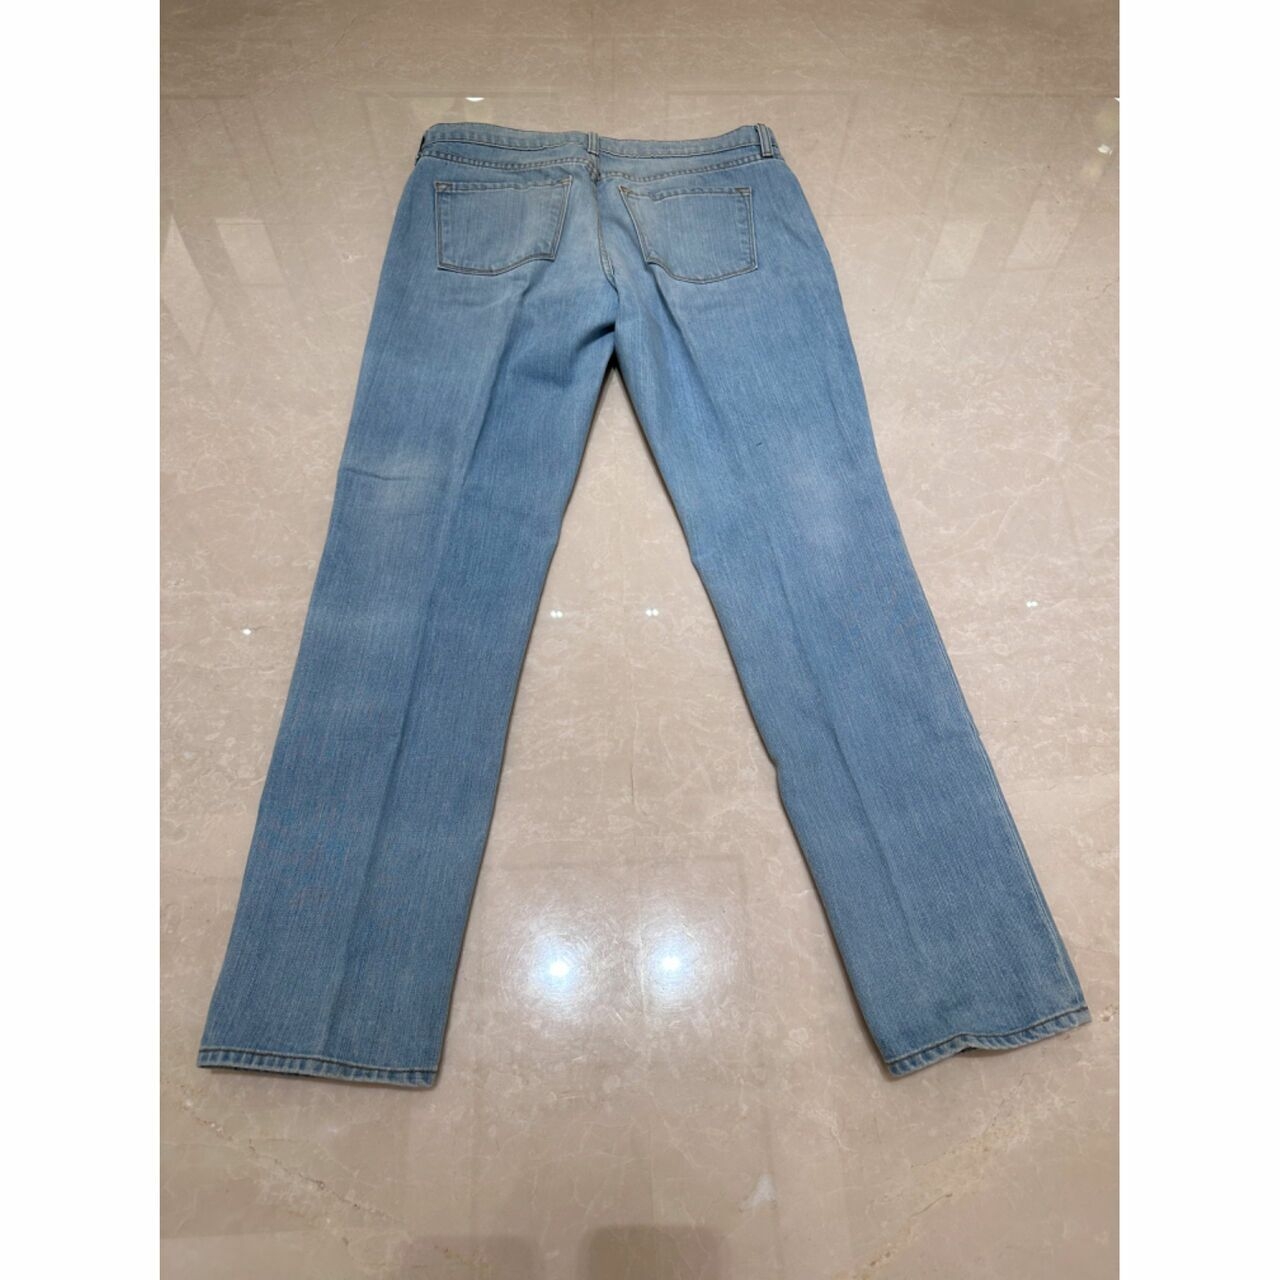 J Brand Light Blue Ripped Jeans Long Pants